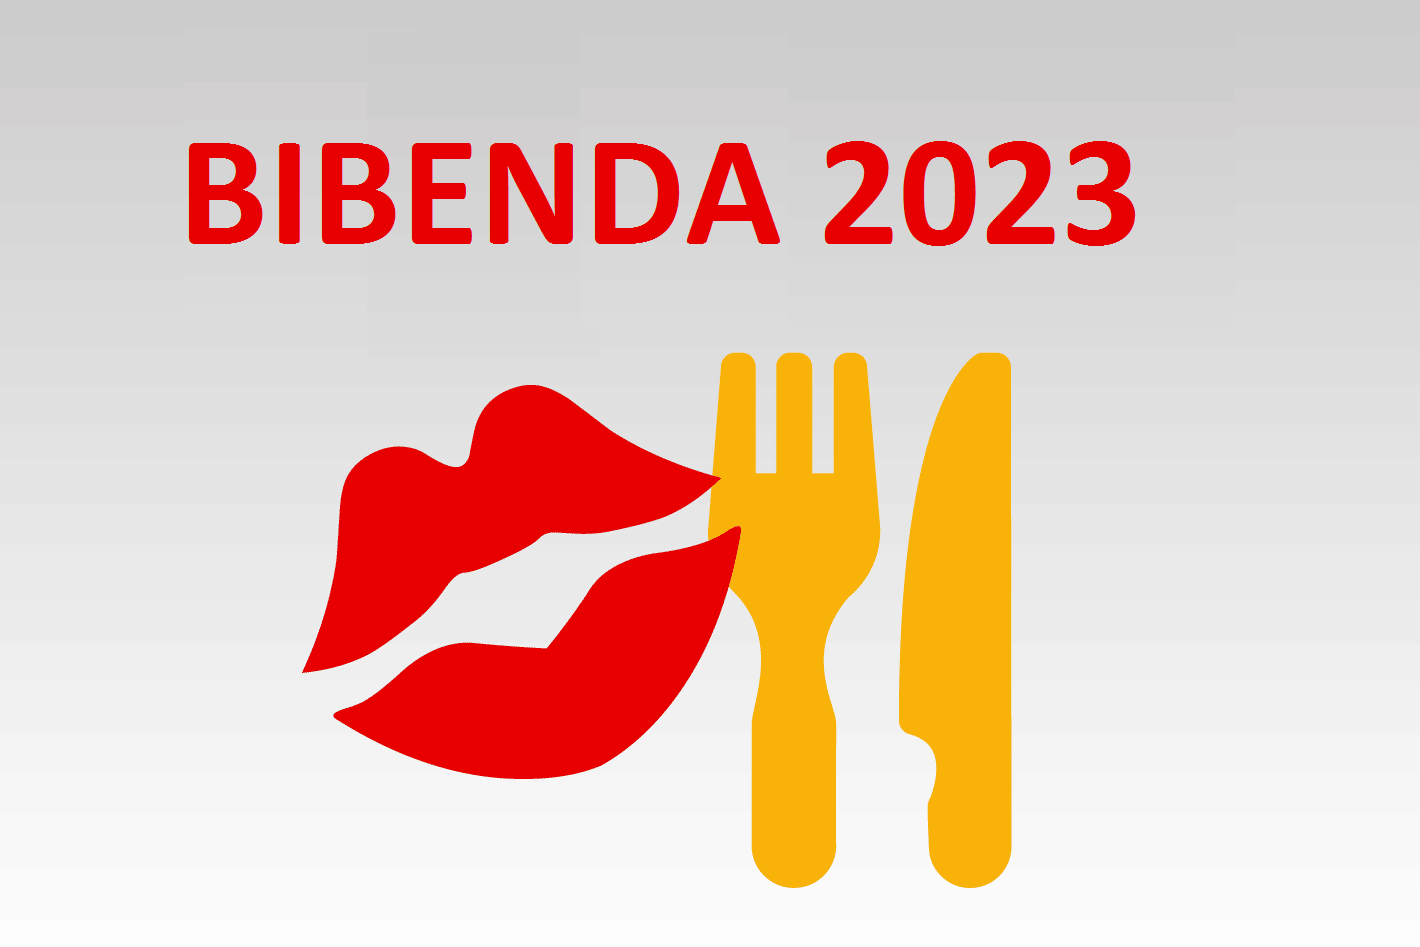 Bibenda 2022 - Ristoranti